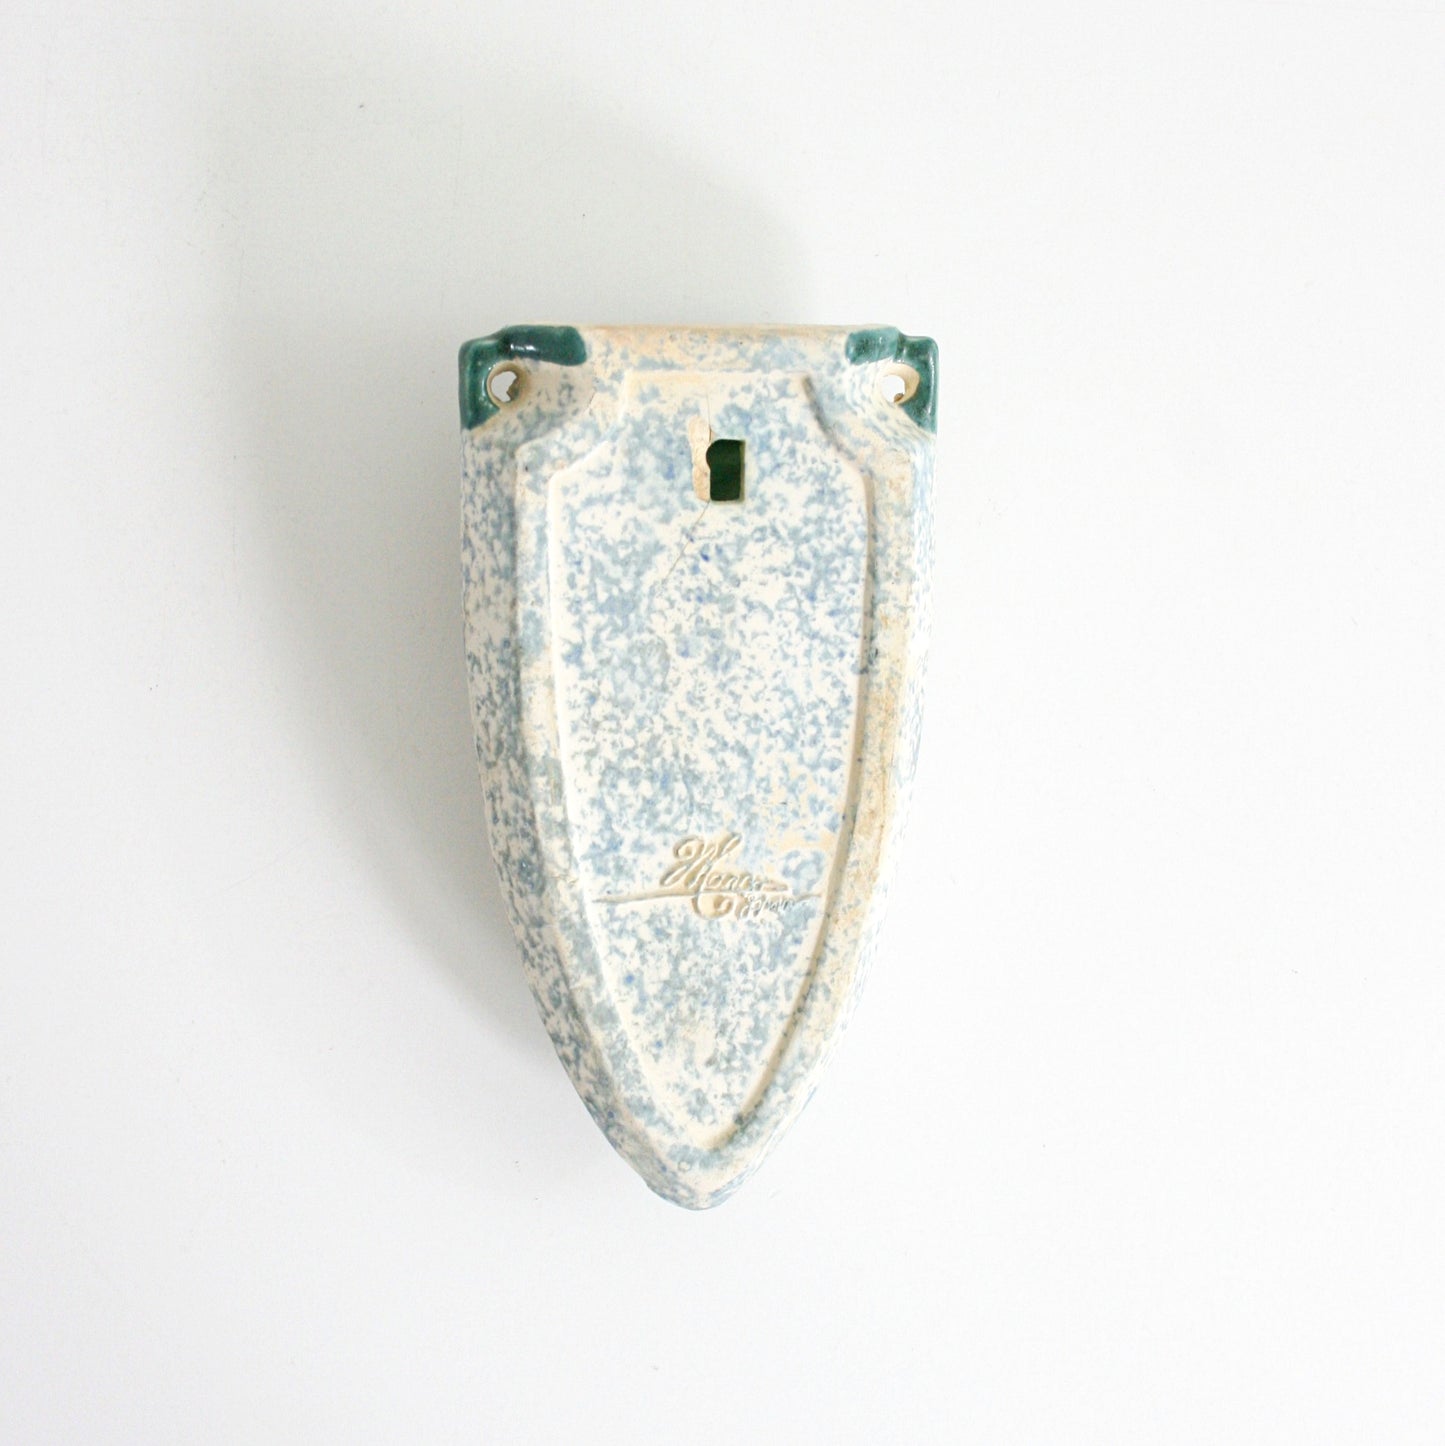 SOLD - Colorful Vintage Ceramic Flower Wall Pocket from Japan